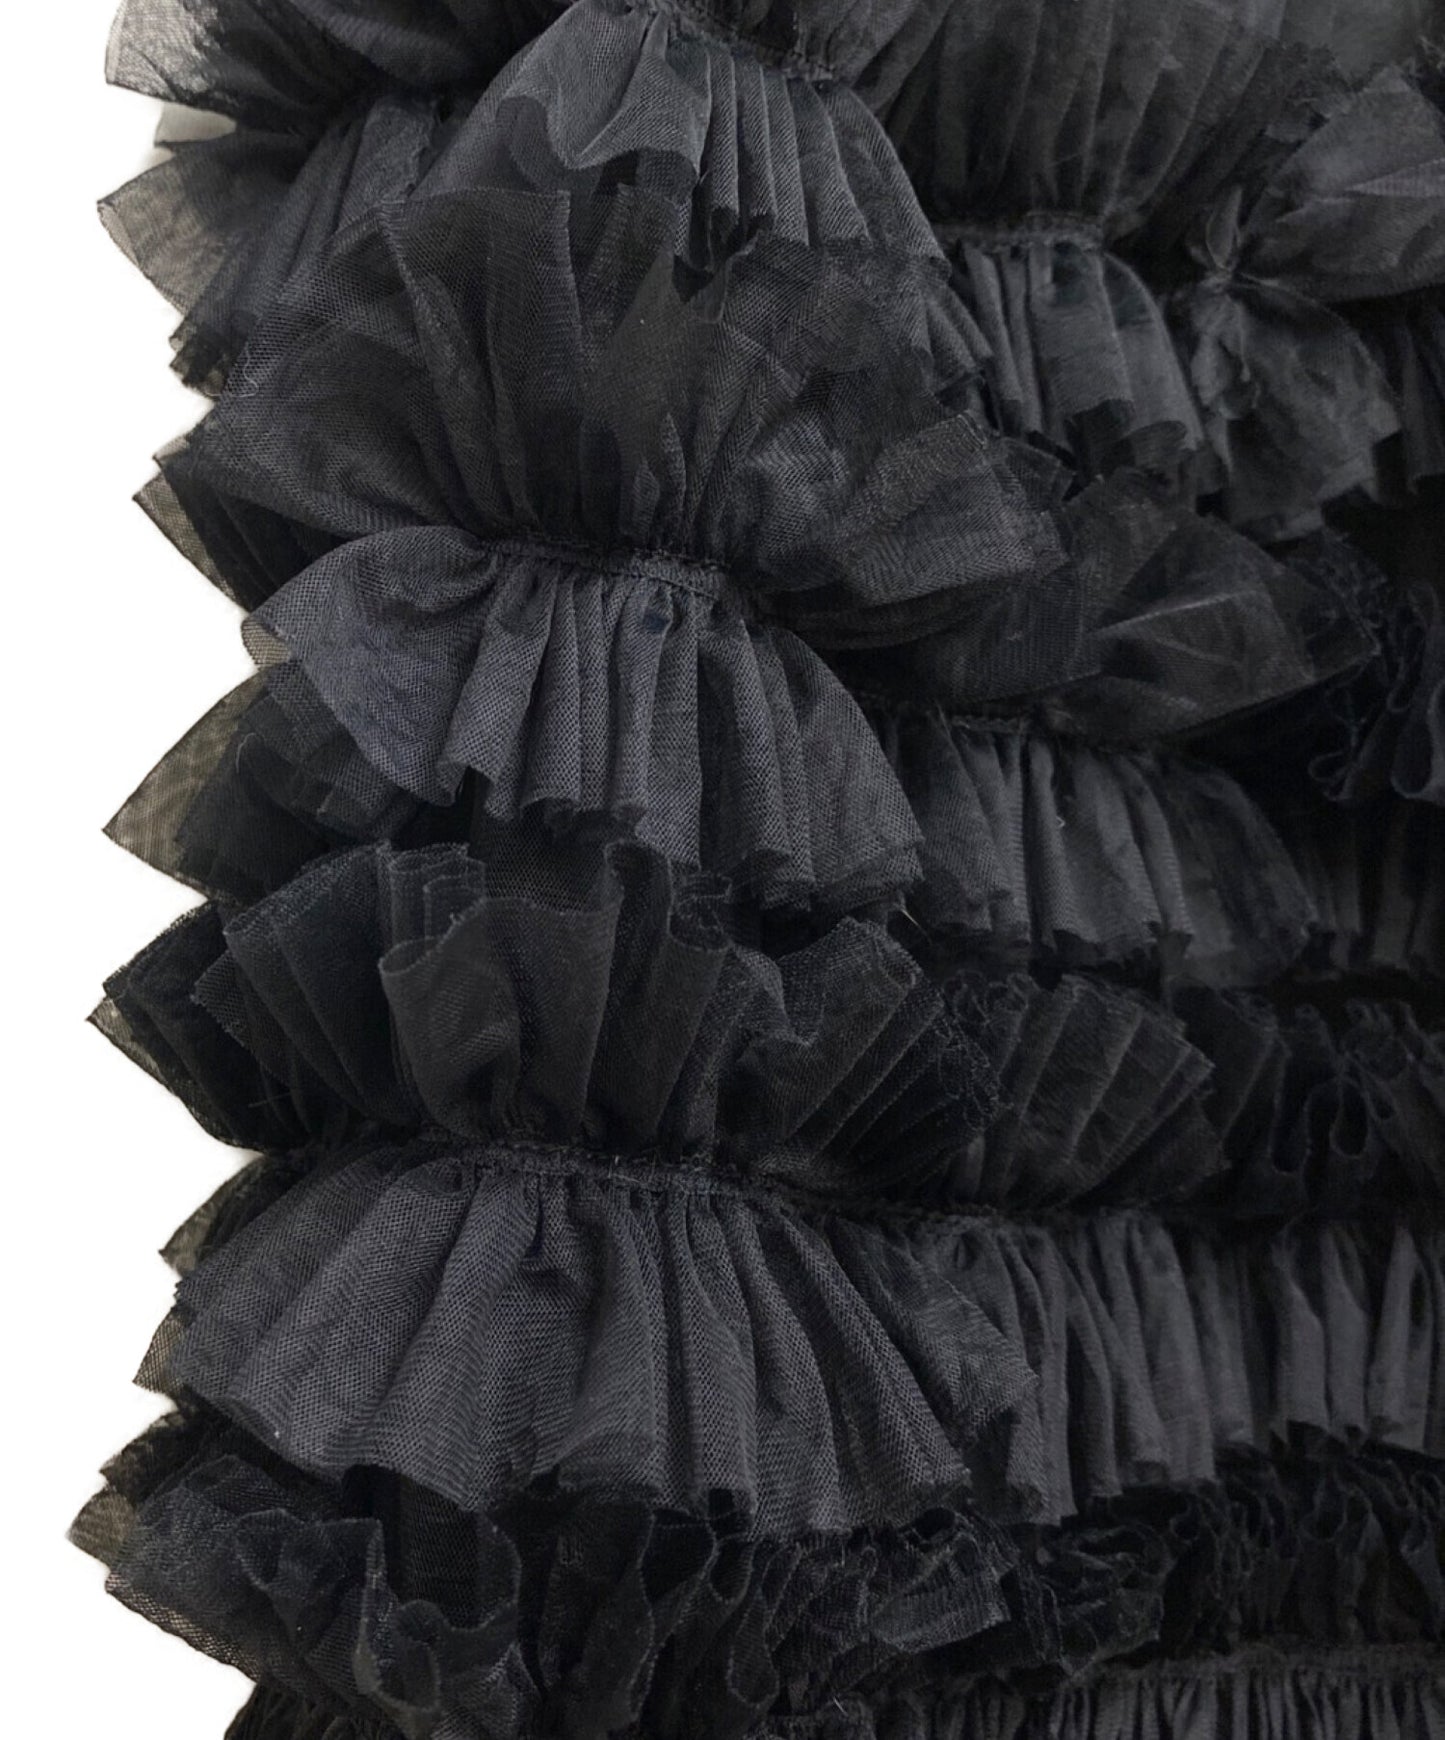 Limi Feu Design Lace Skirt LG-S10-903